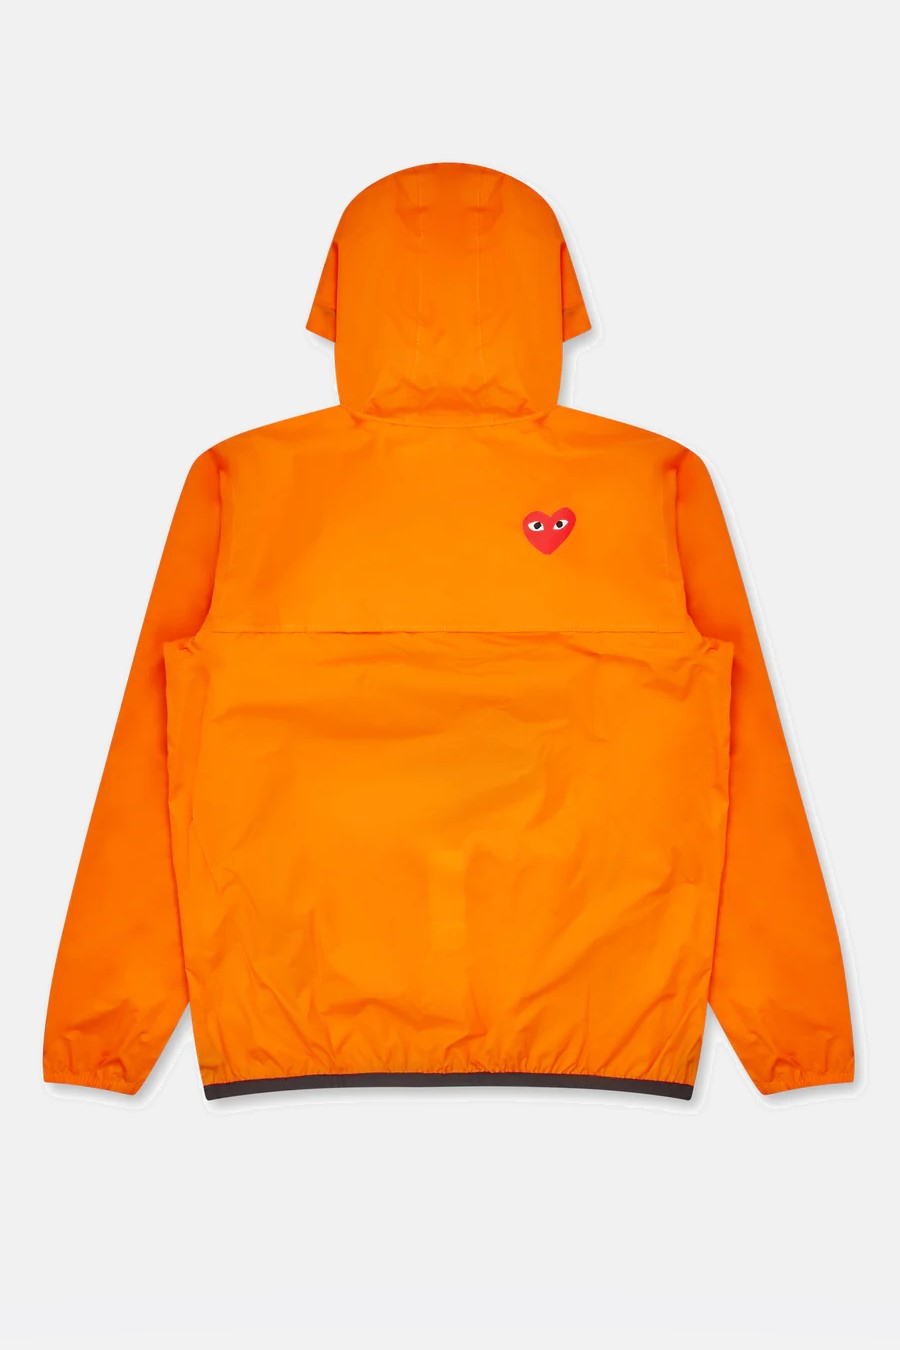 x K-way Jacket Orange | Svean AS Nettbutikk